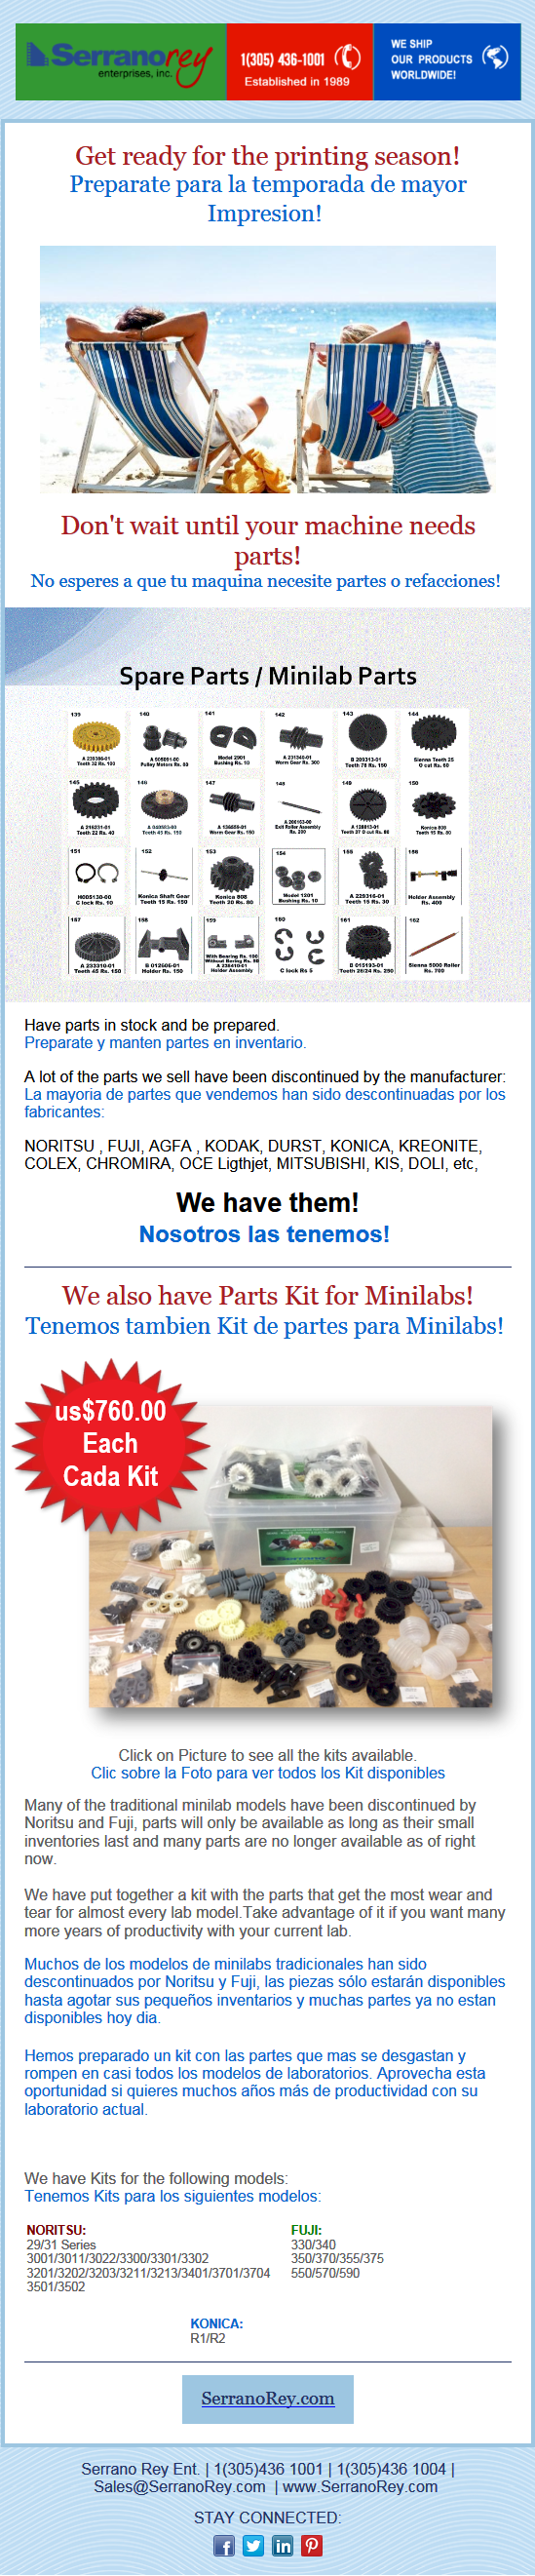 Parts Kit Mass Mail